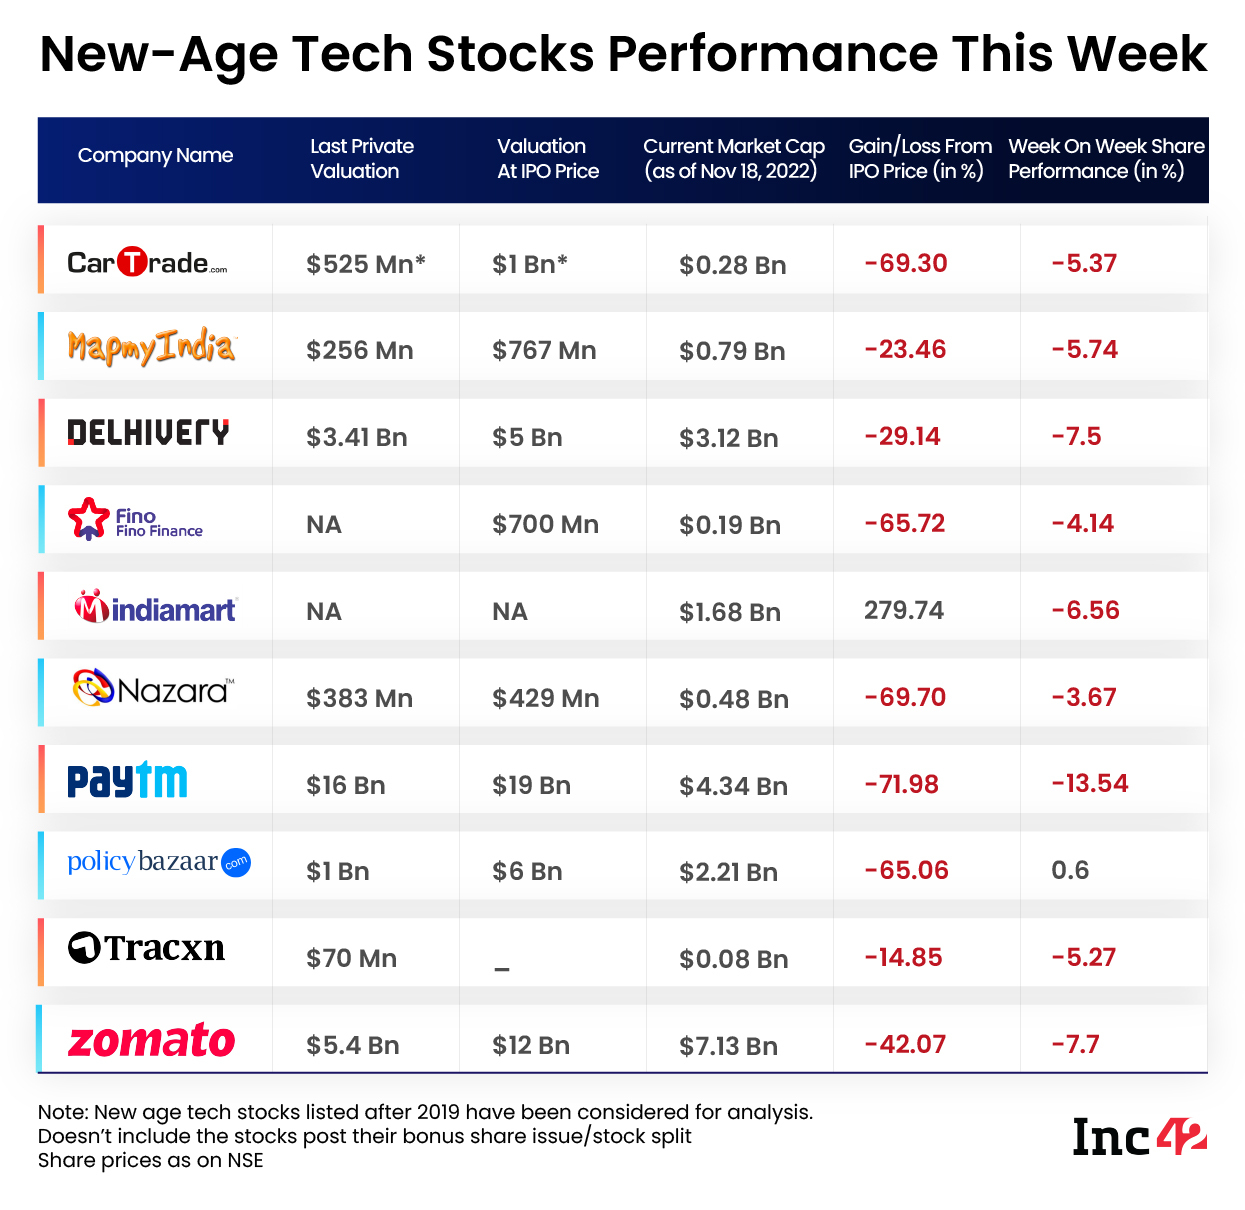 New-Age Tech Stocks Slump This Week; Paytm Biggest Loser